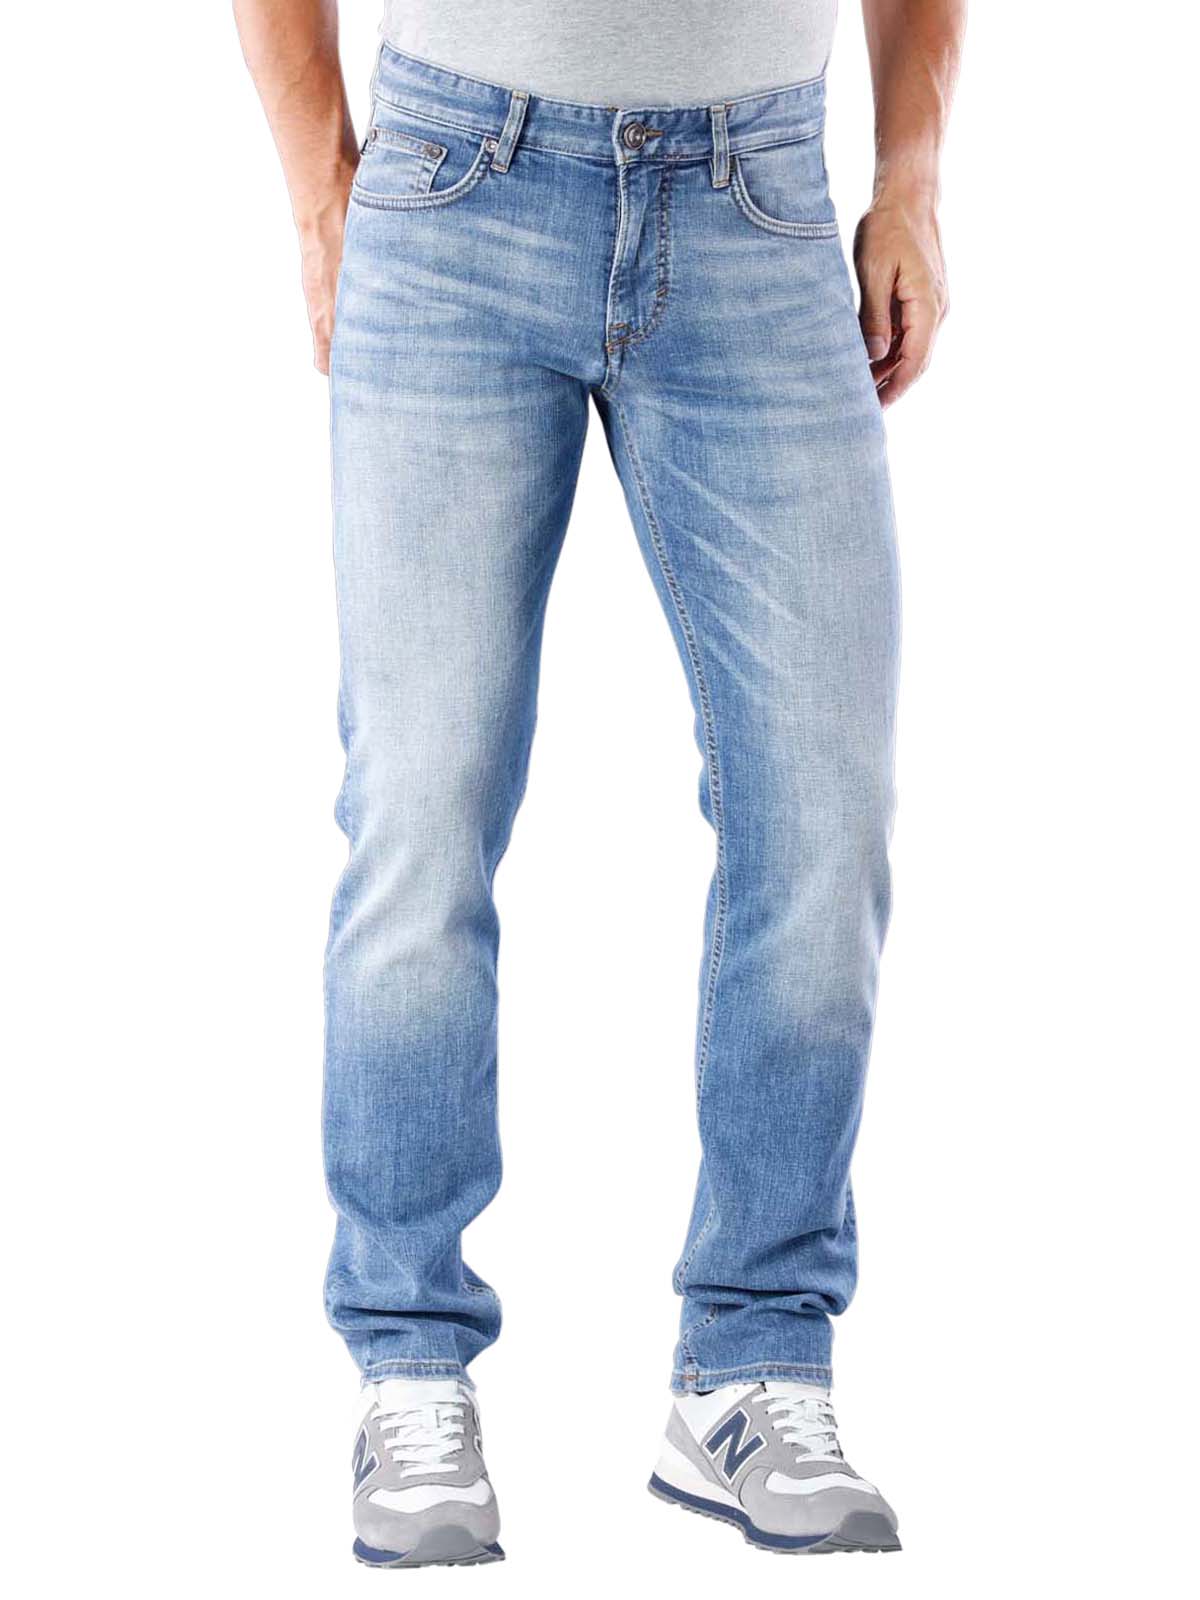 joop jeans regular fit